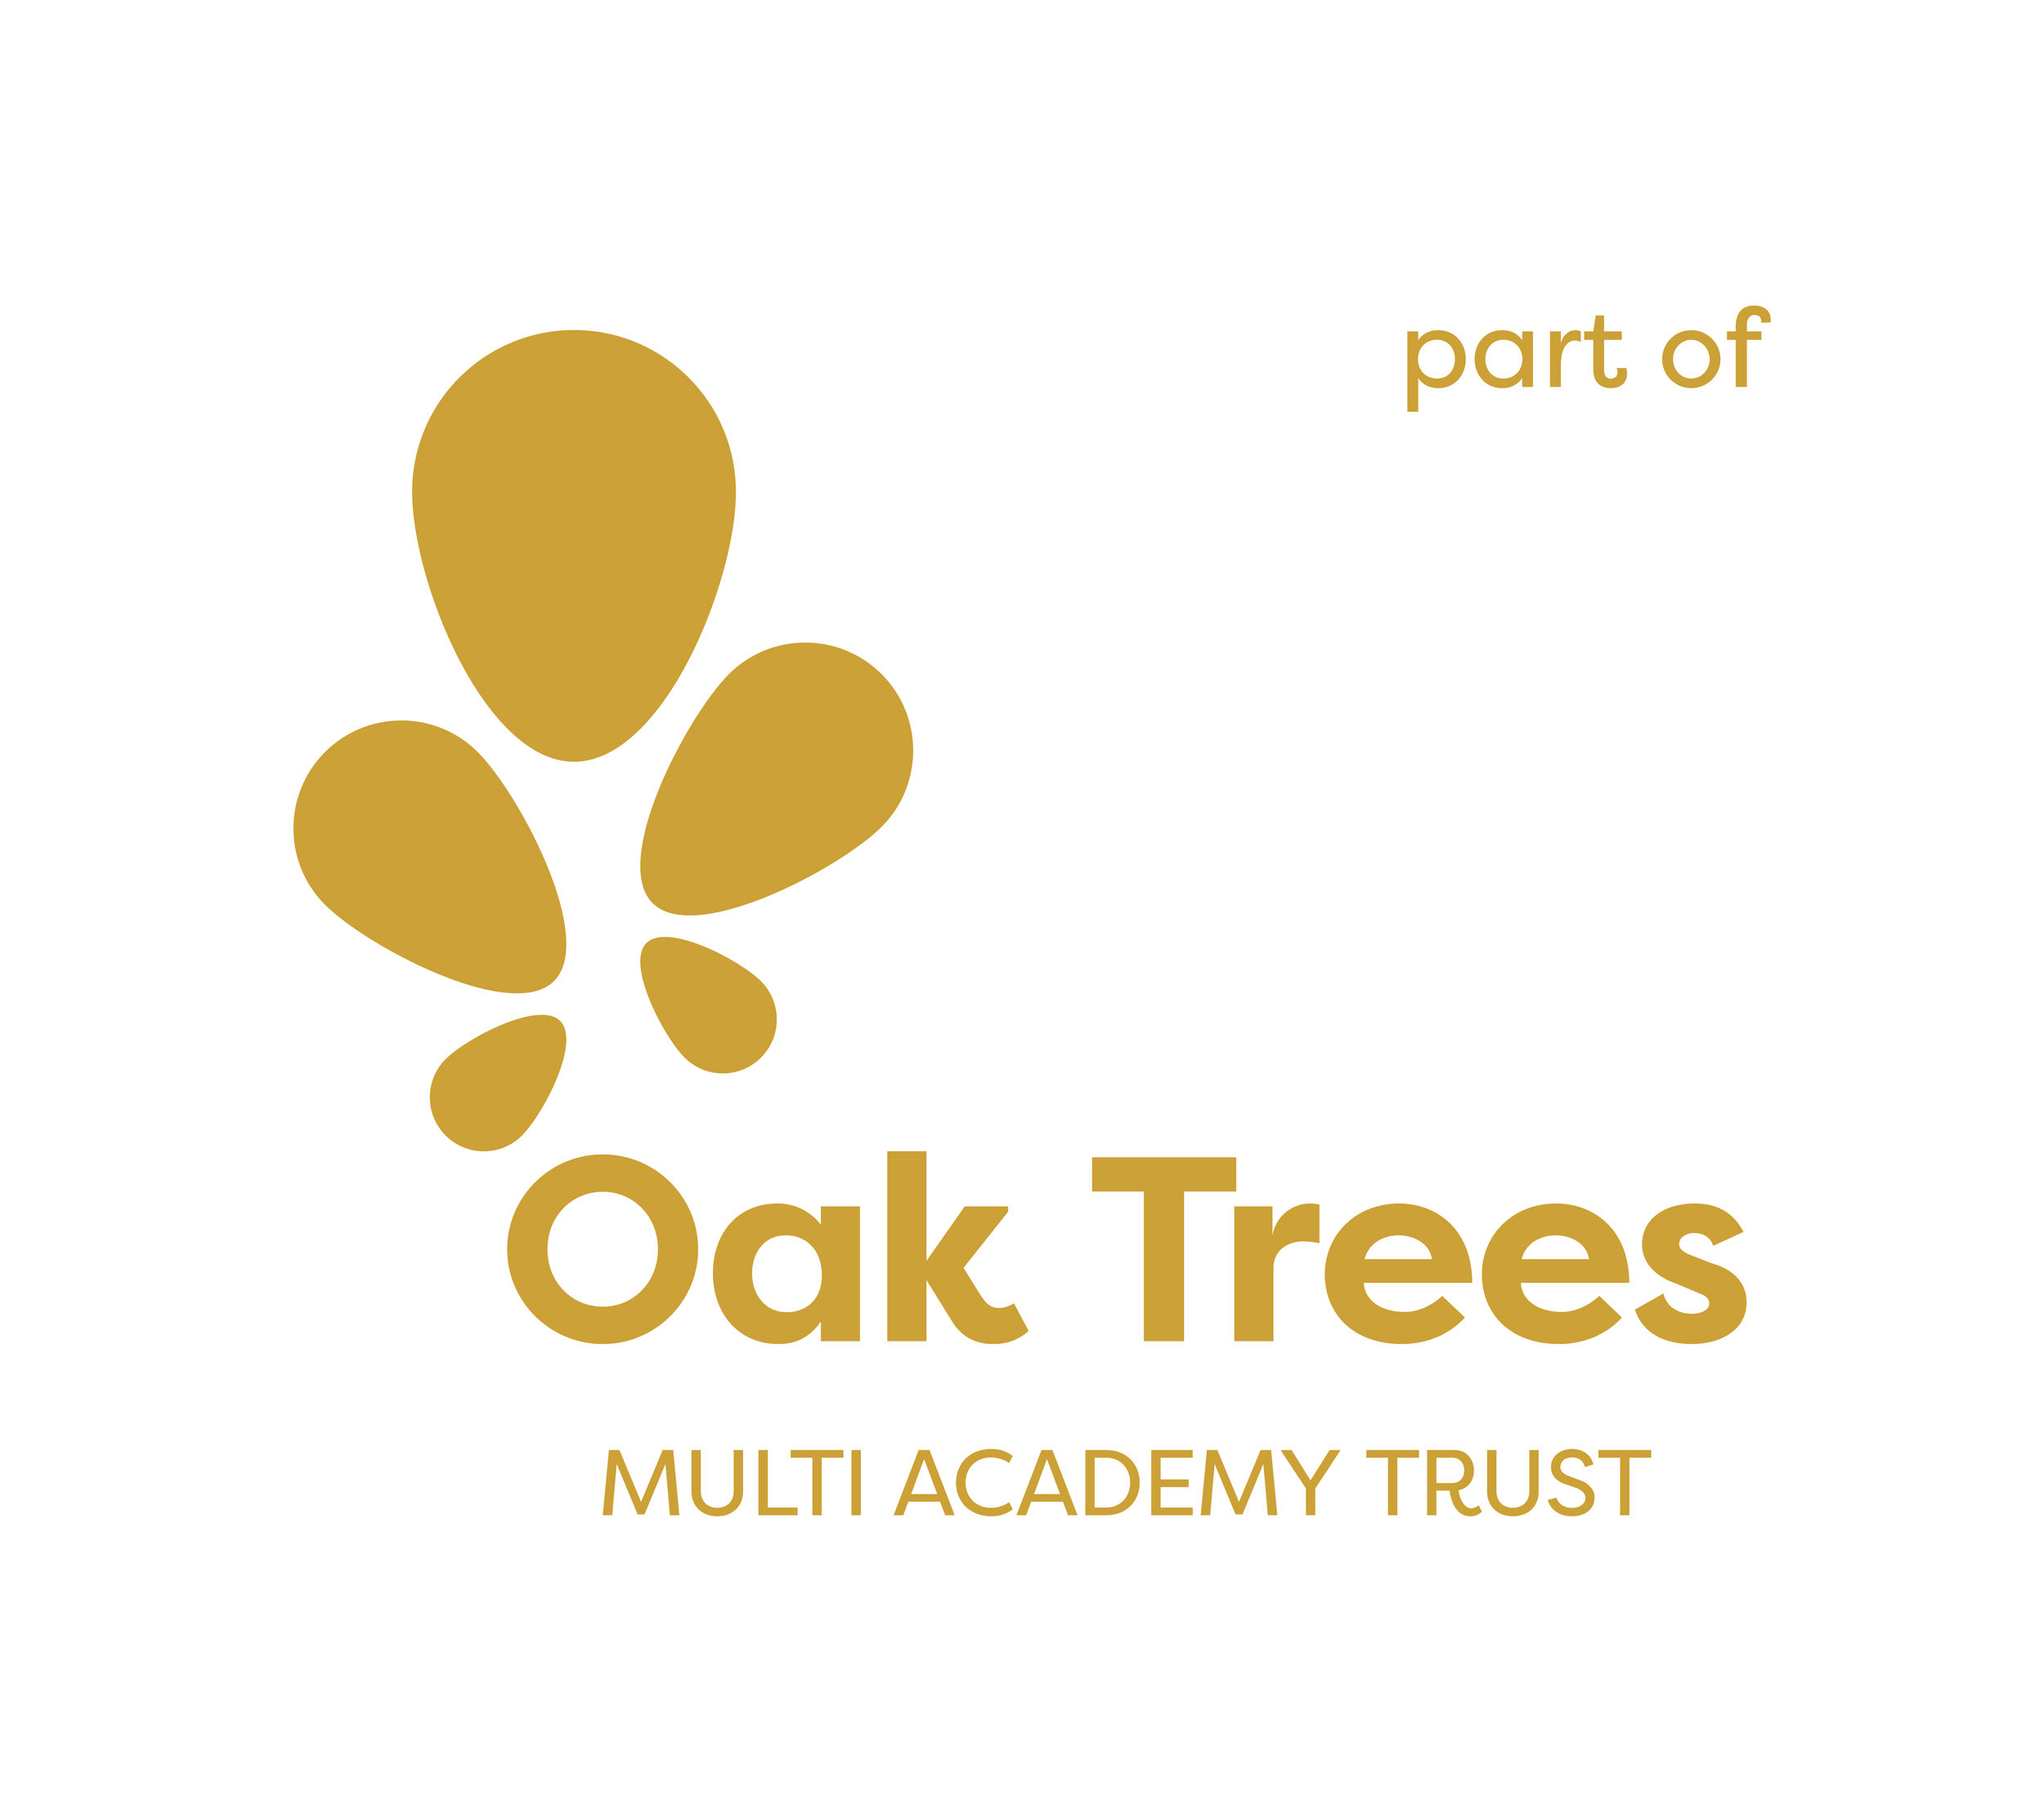 Oak Trees_part of logo_CMYK-01.jpg